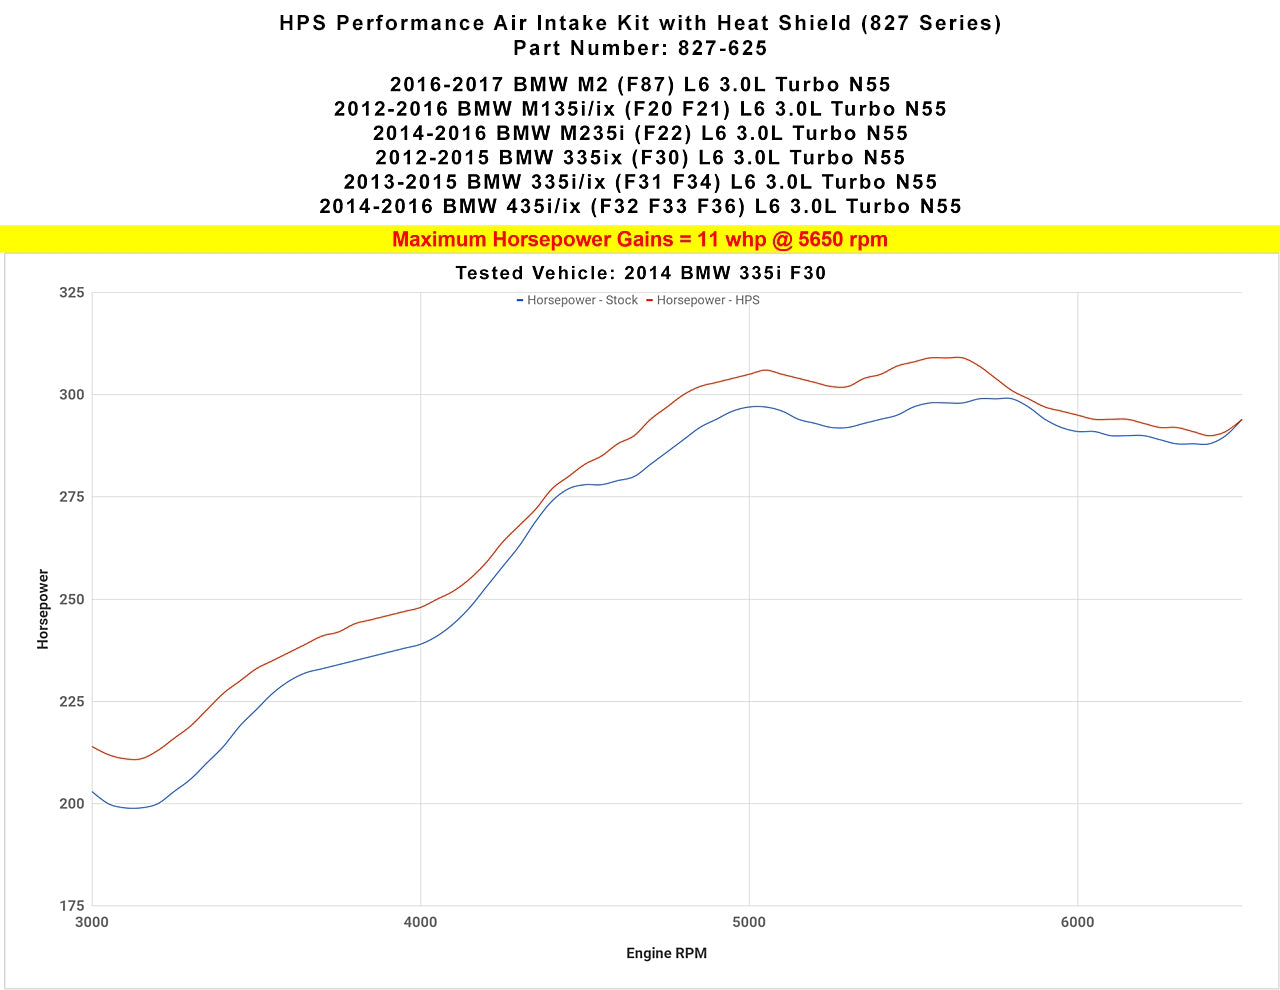 Dyno proven gains 11 whp HPS Performance Shortram Air Intake Kit 2013-2015 BMW 335i 335ix F31 F34 3.0L Turbo N55 827-625BL